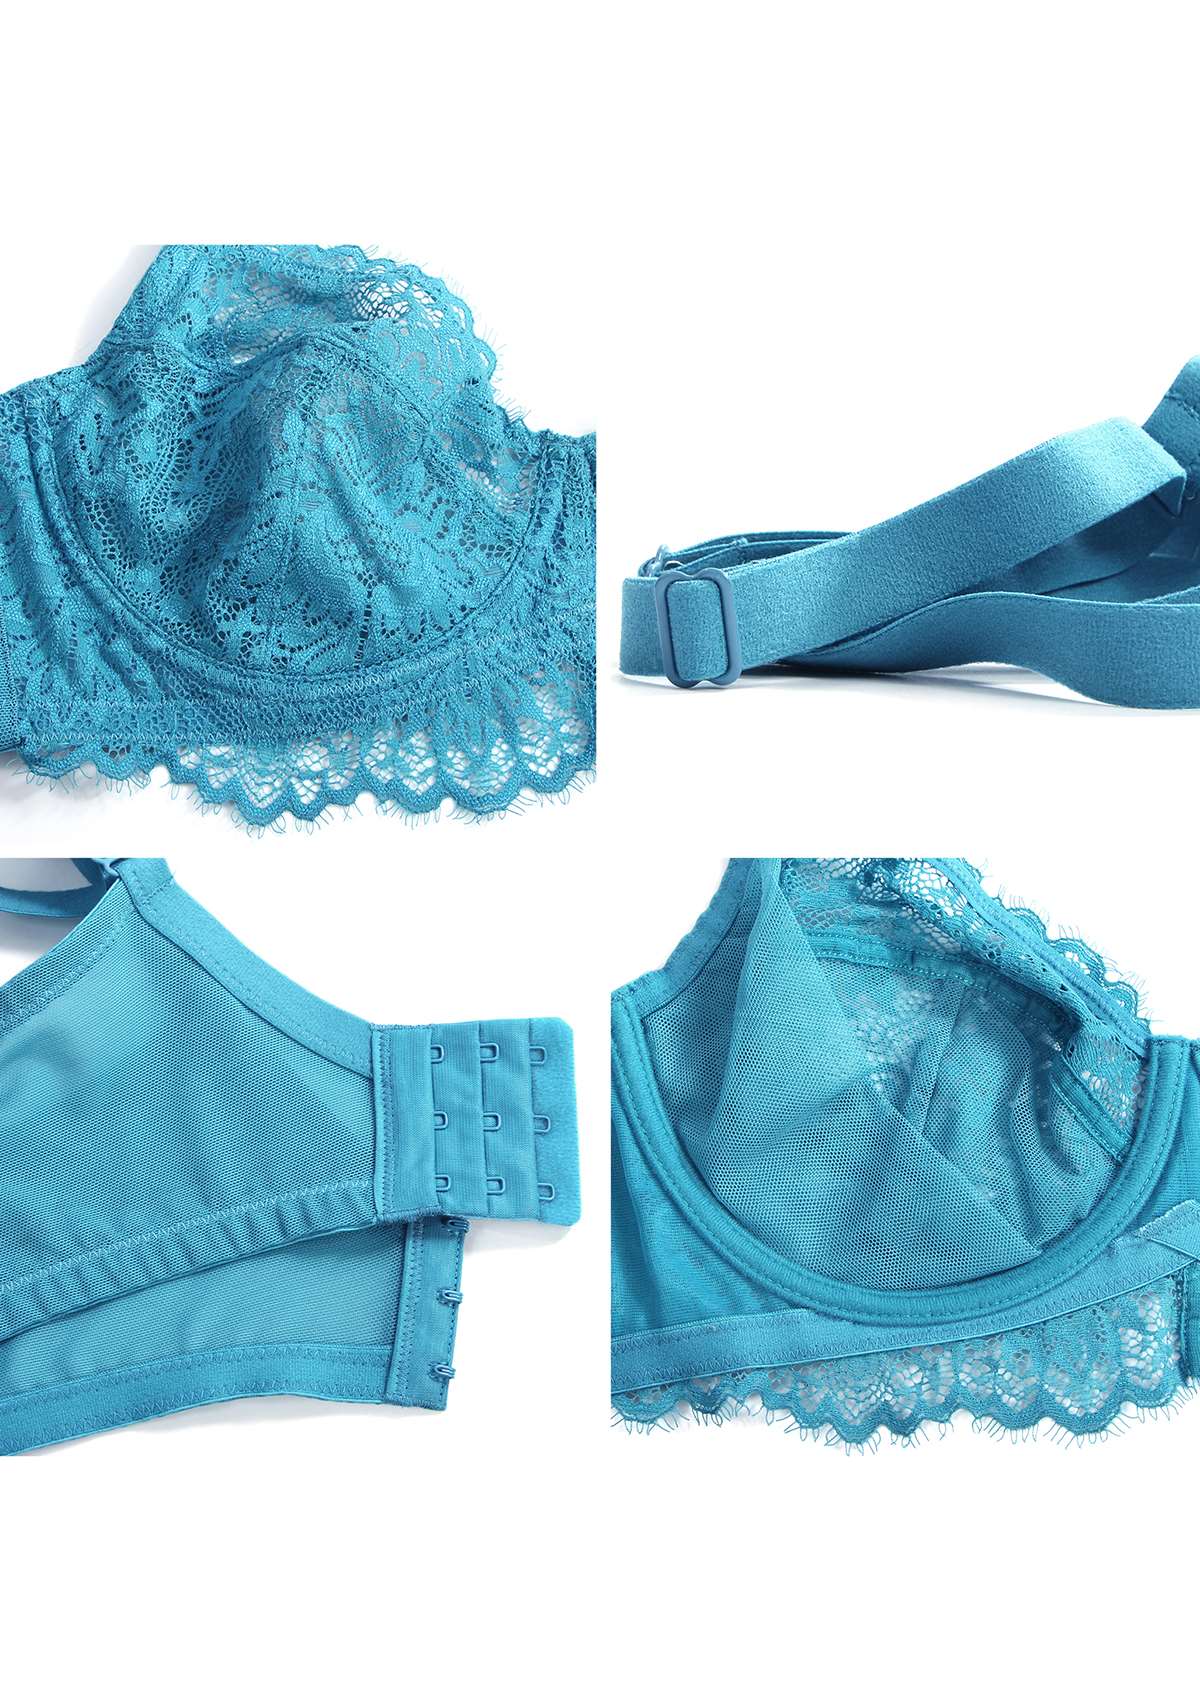 HSIA Sunflower Lace Bra And Panty: Cute Plus Size Comfort Bra - Horizon Blue / 38 / G